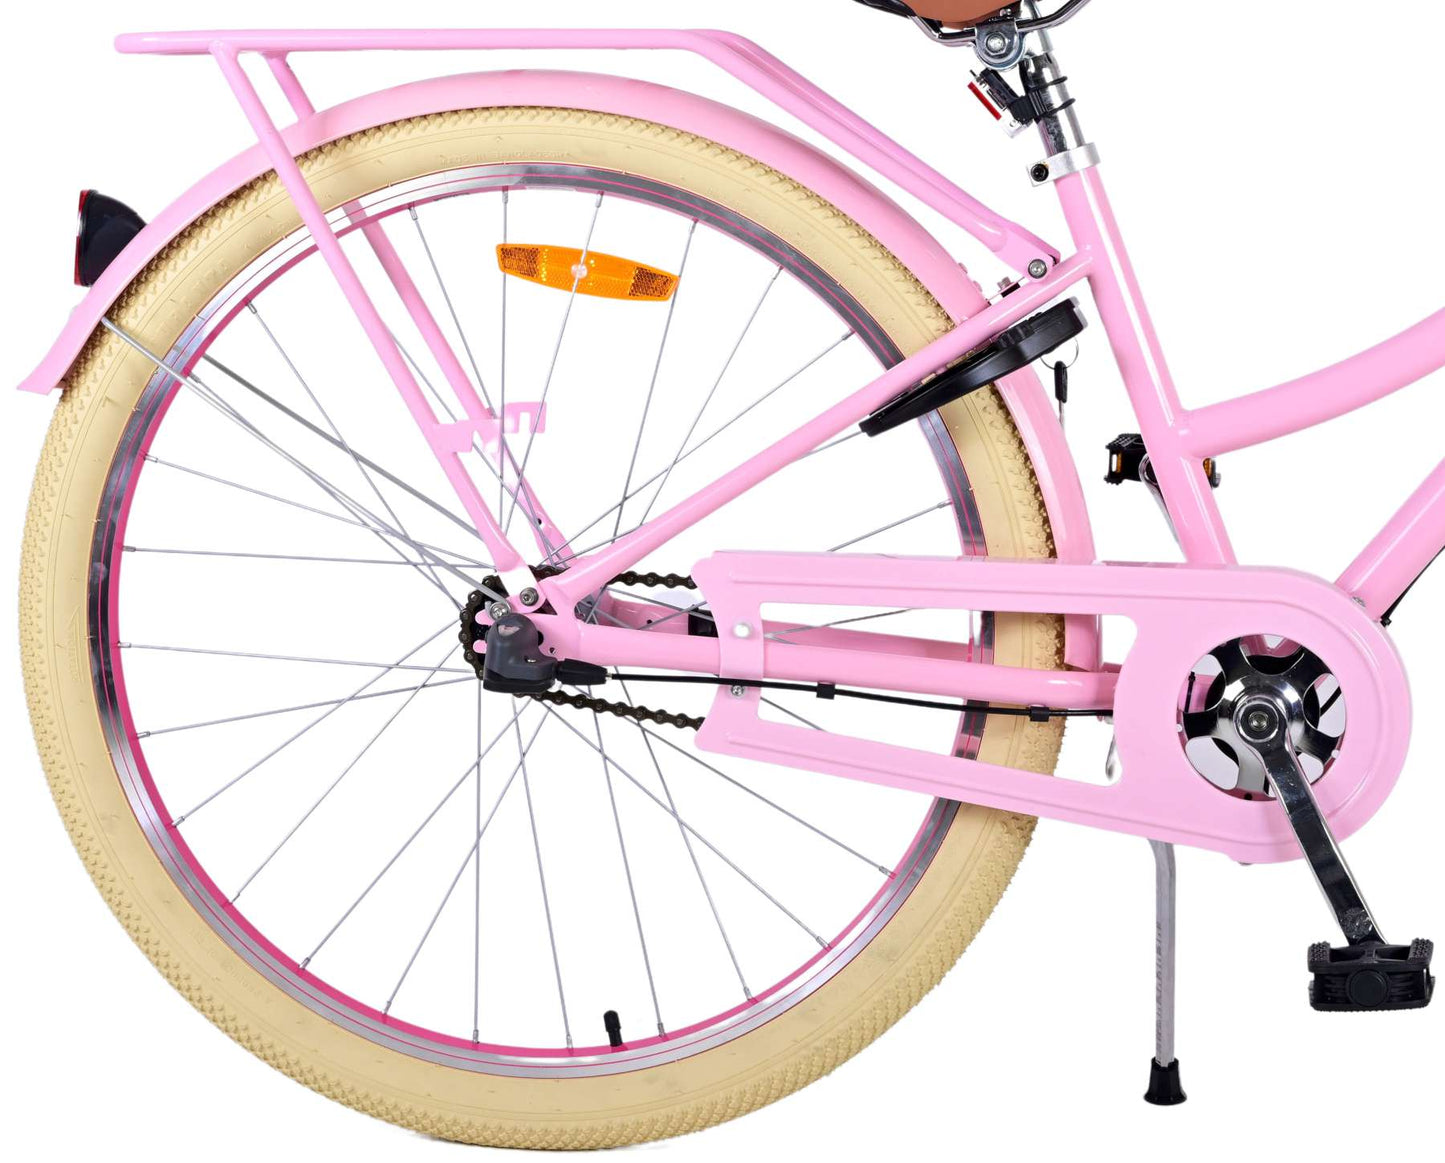 Virerare Eccellenti Bicycle per bambini - Girls - 26 pollici - Pink - 3 marce